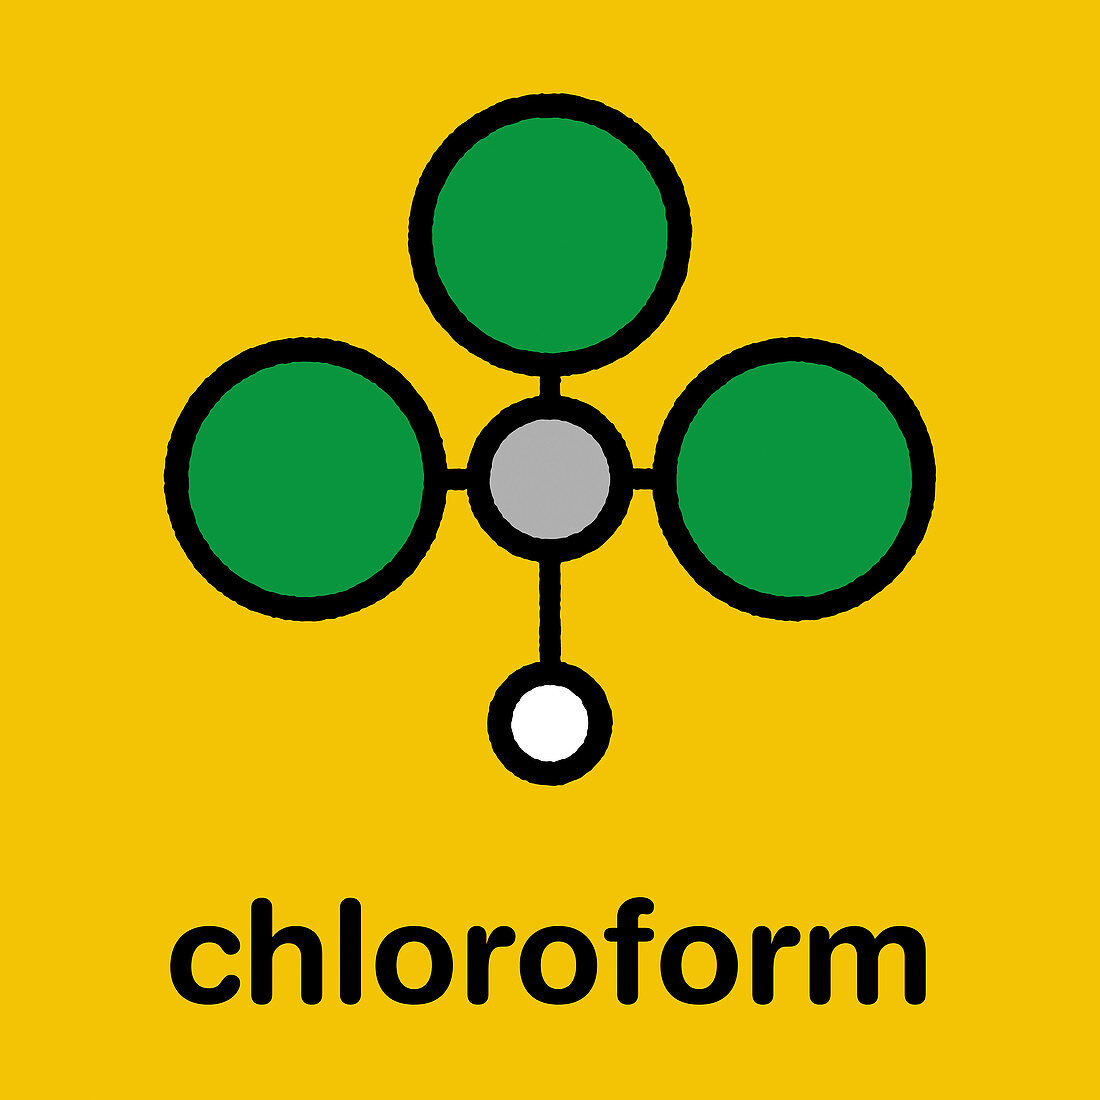 Chloroform solvent molecule